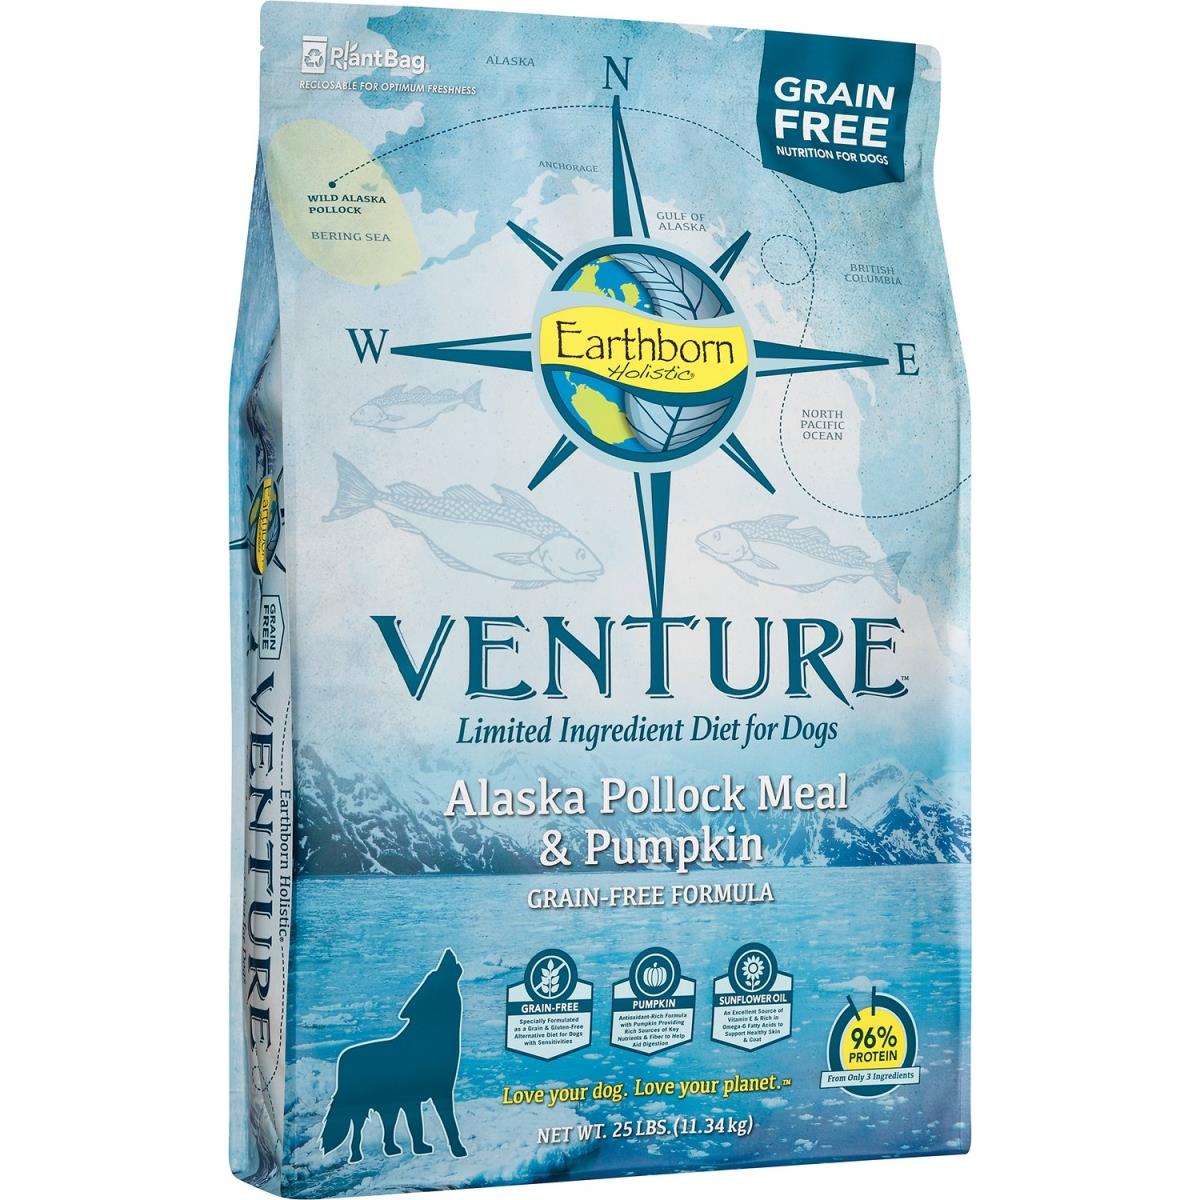 Pf57000 Venture Alaska Pollock Meal & Pumpkin Grain-free Dry Dog Food - 25 Lbs